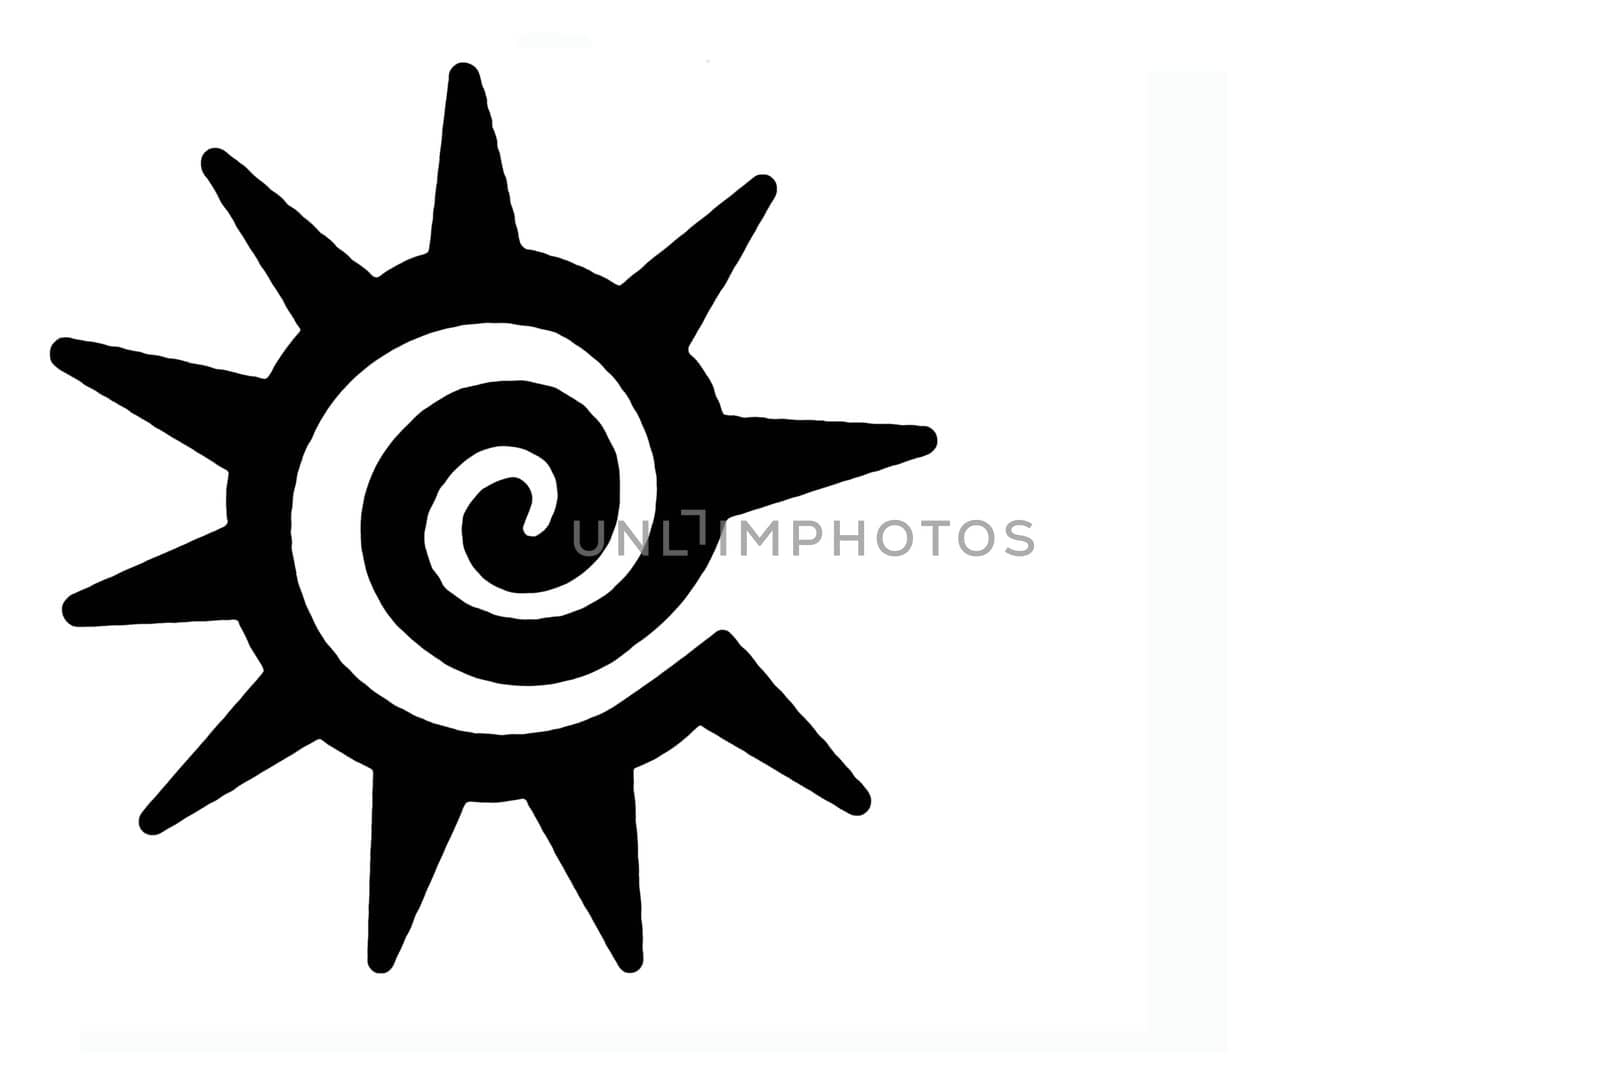 A black and white Soutwestern Sun Symbol